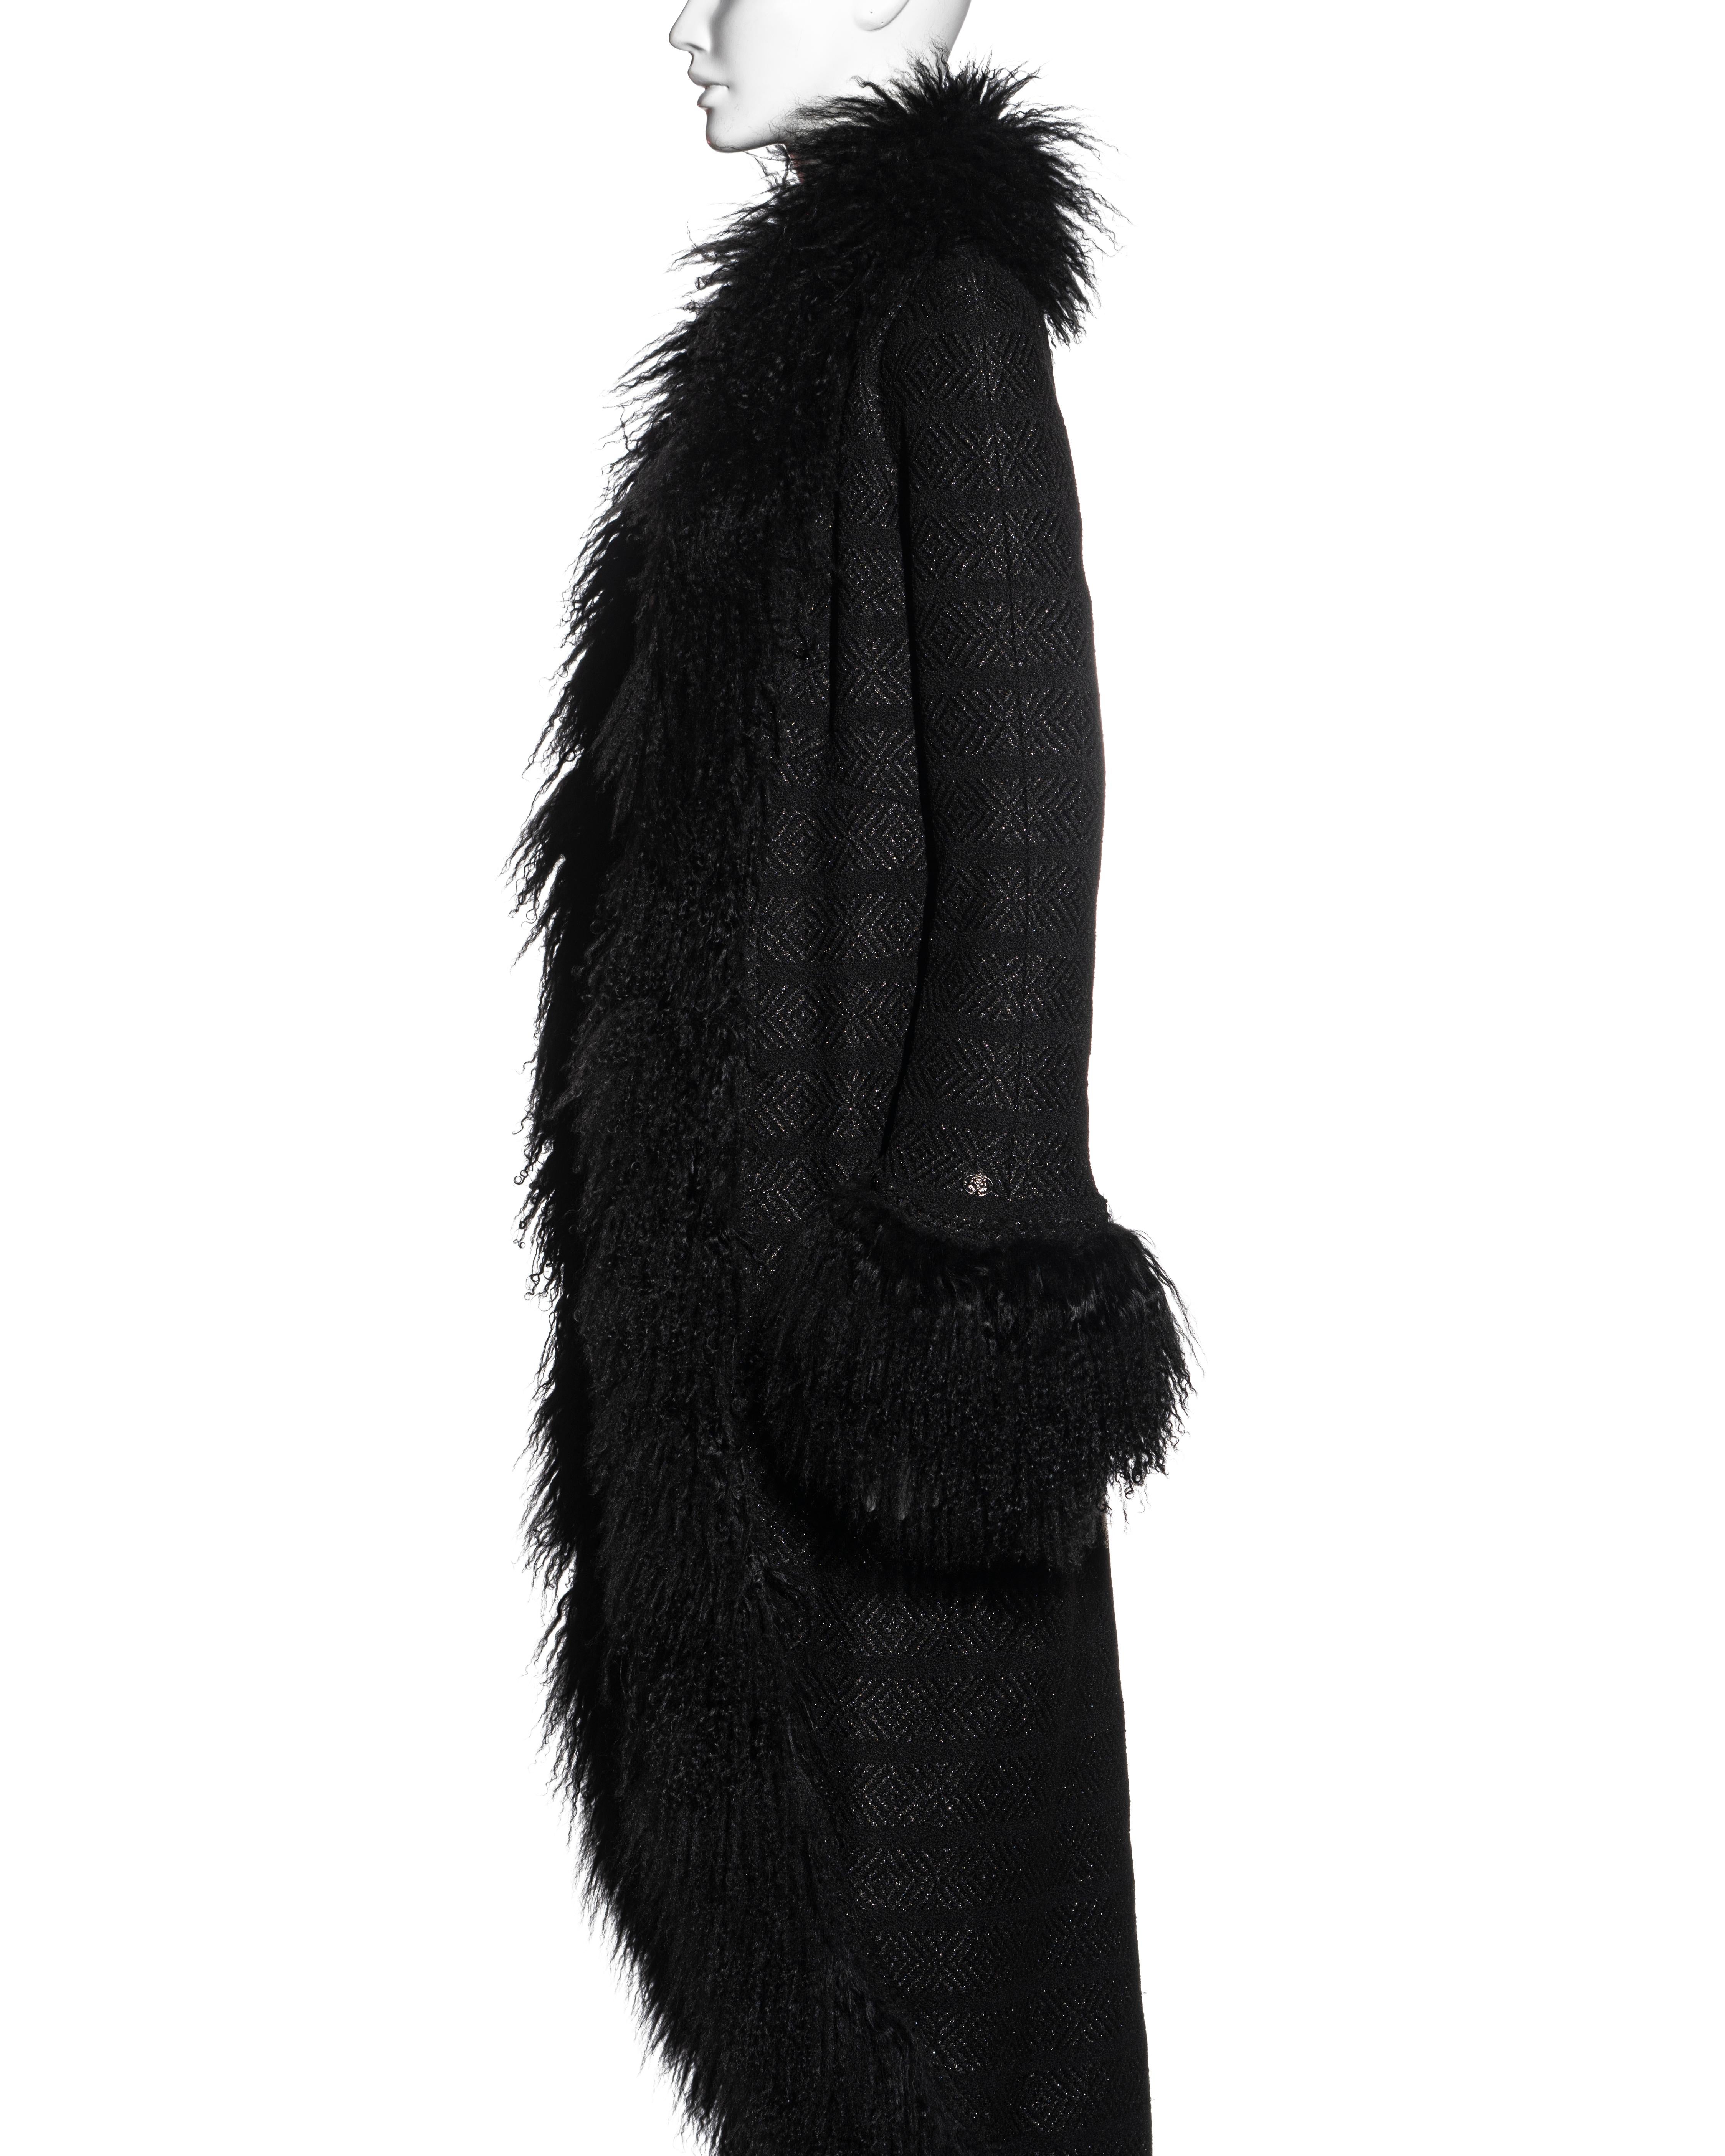 Chanel by Karl Lagerfeld black tweed and Mongolian lambs wool coat, fw 2008 3